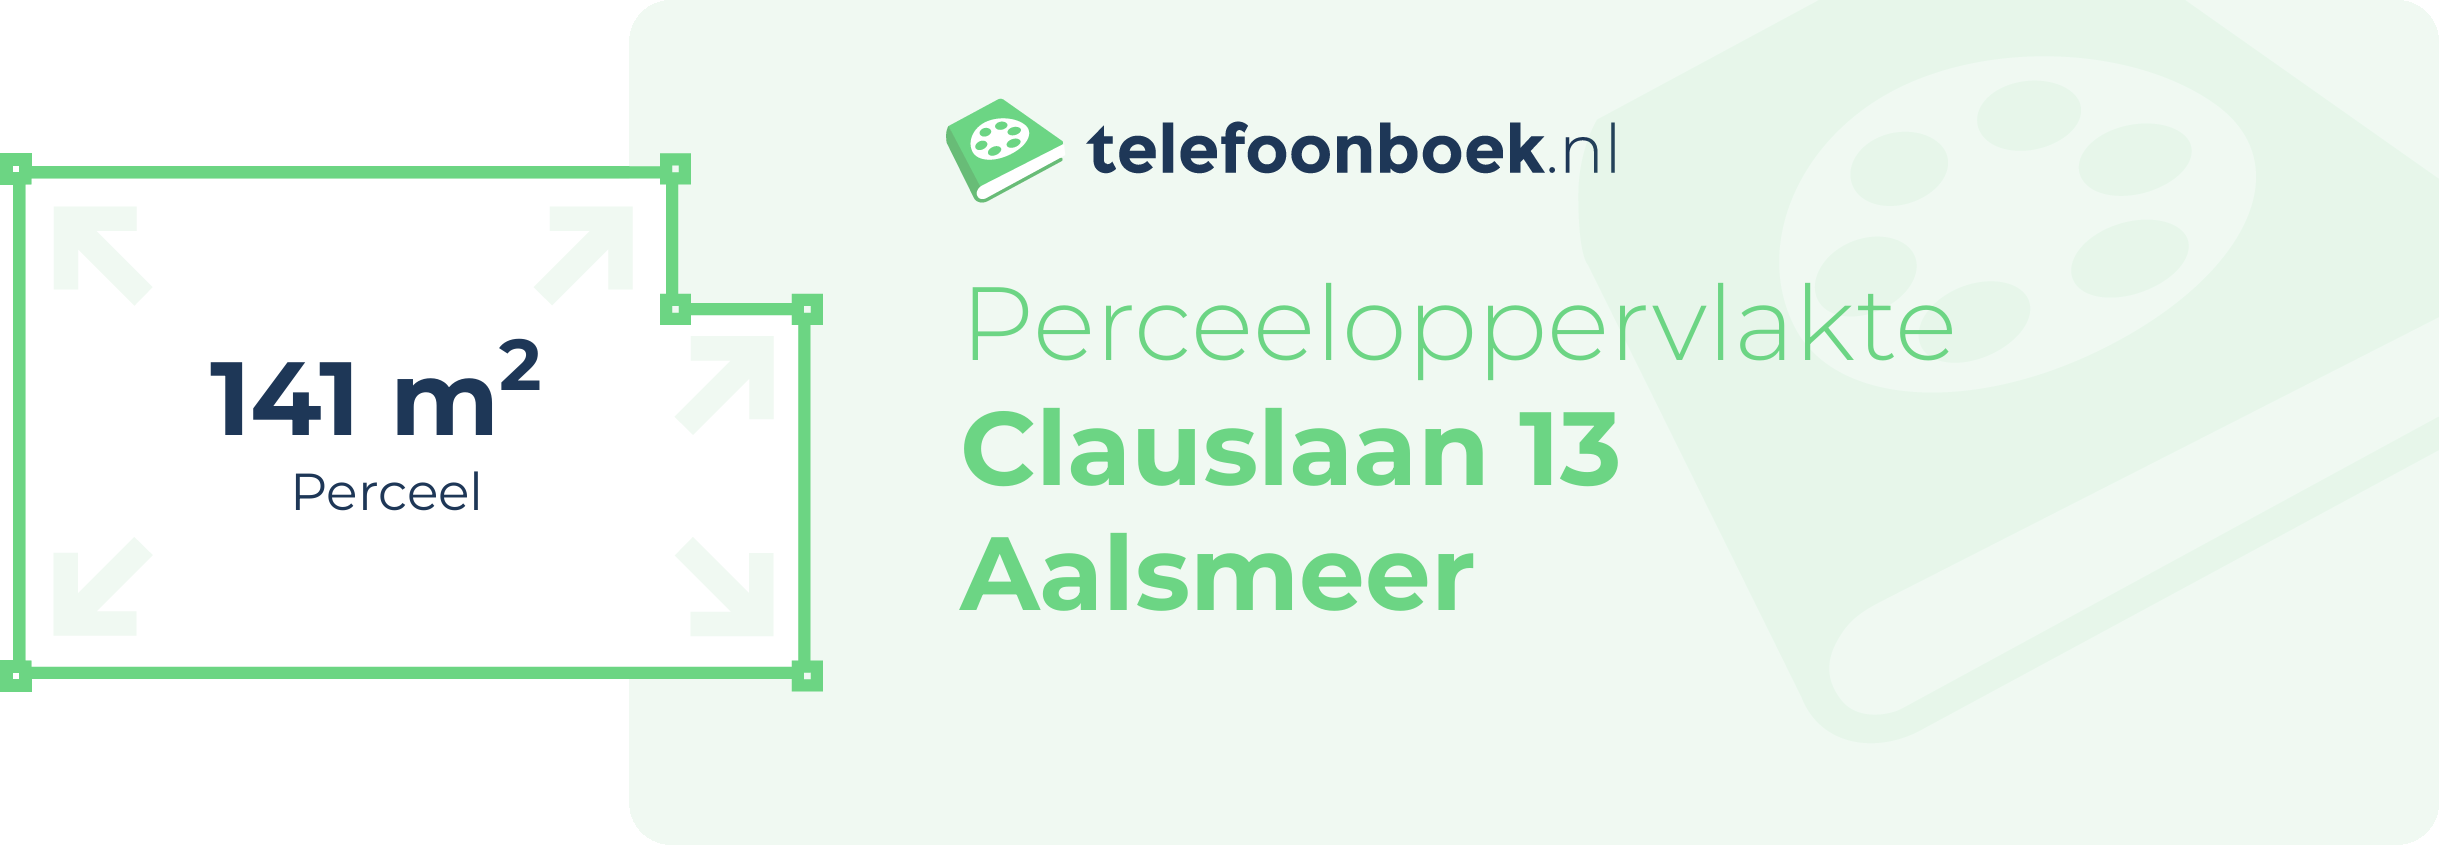 Perceeloppervlakte Clauslaan 13 Aalsmeer